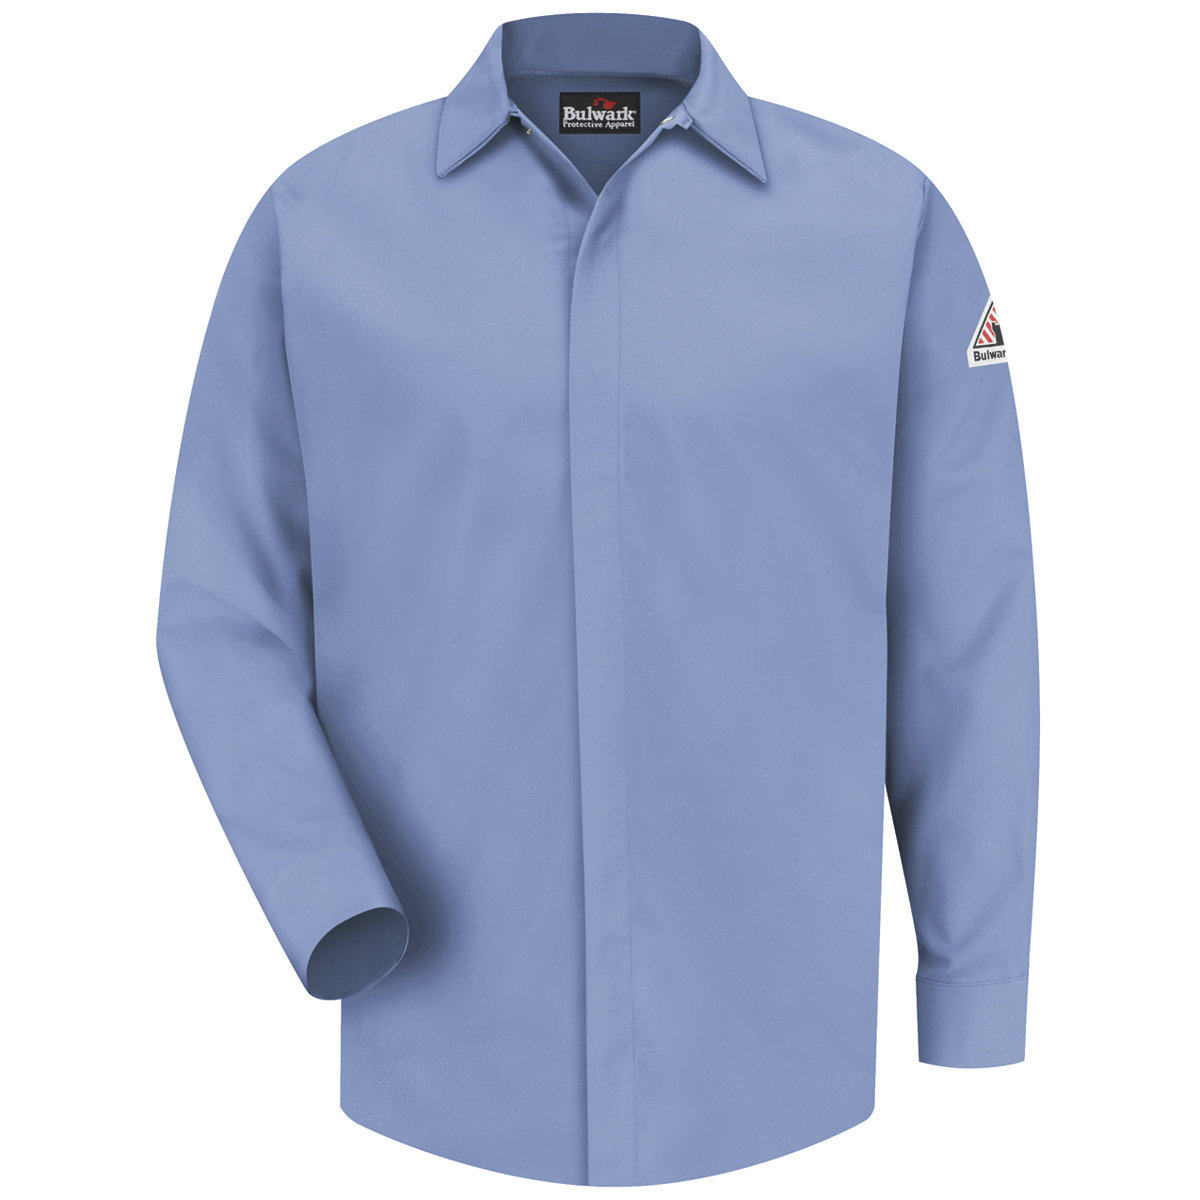 Bulwark® Medium Tall Light Blue Westex Ultrasoft®/Cotton/Nylon Flame Resistant Work Shirt With Gripper Front Closure